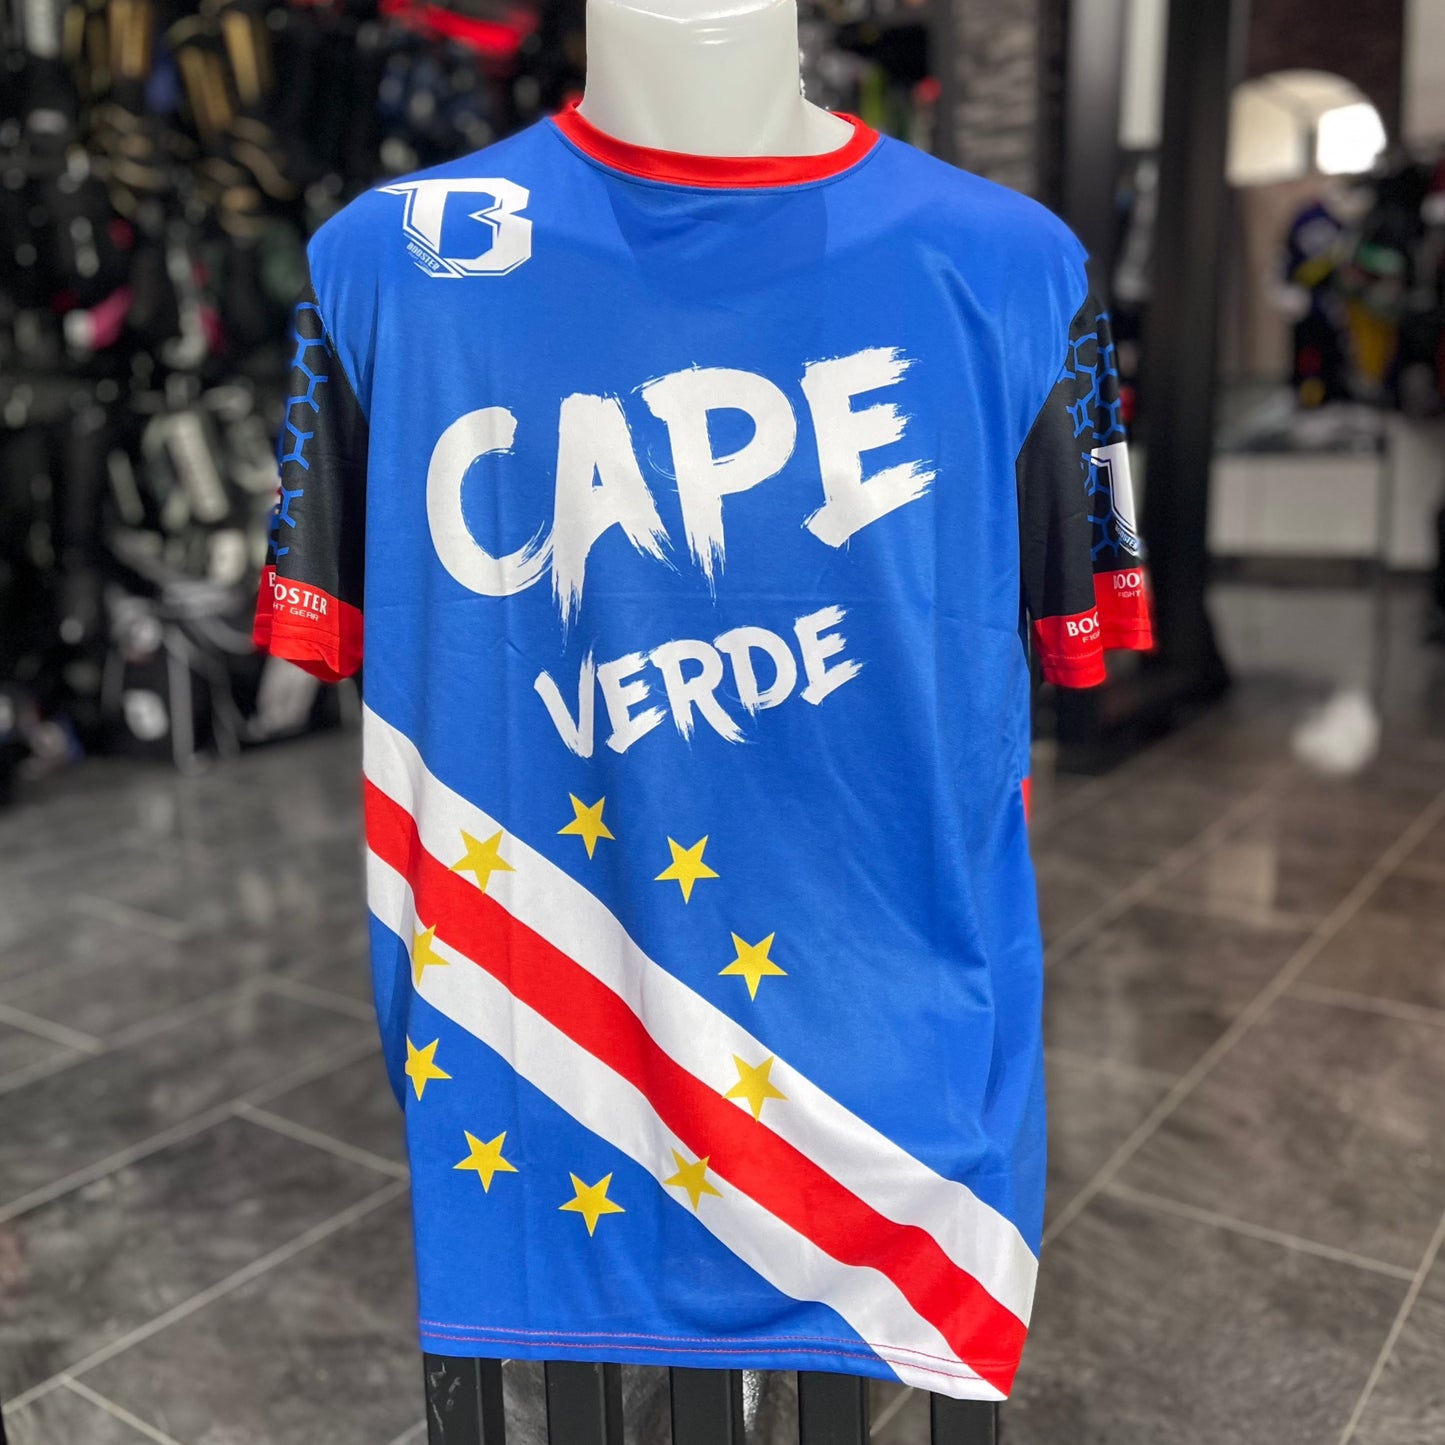 Kaapverdië Cape Verde shirt